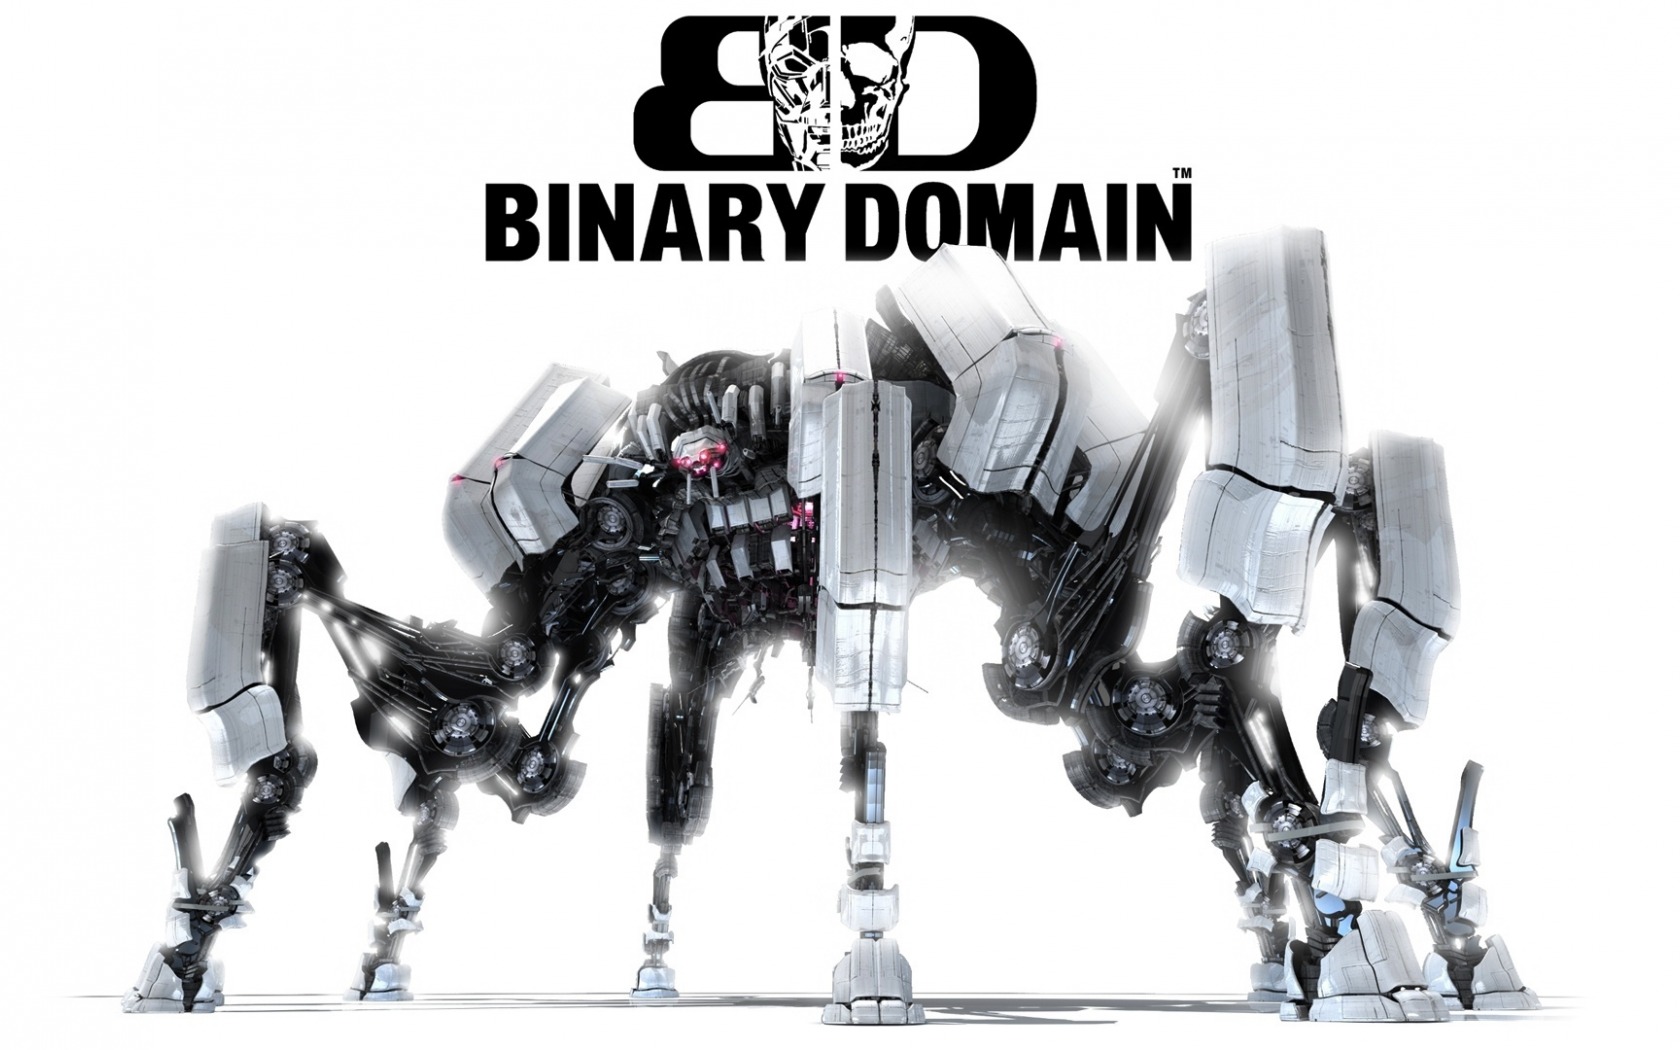 Binary domain no resolution options